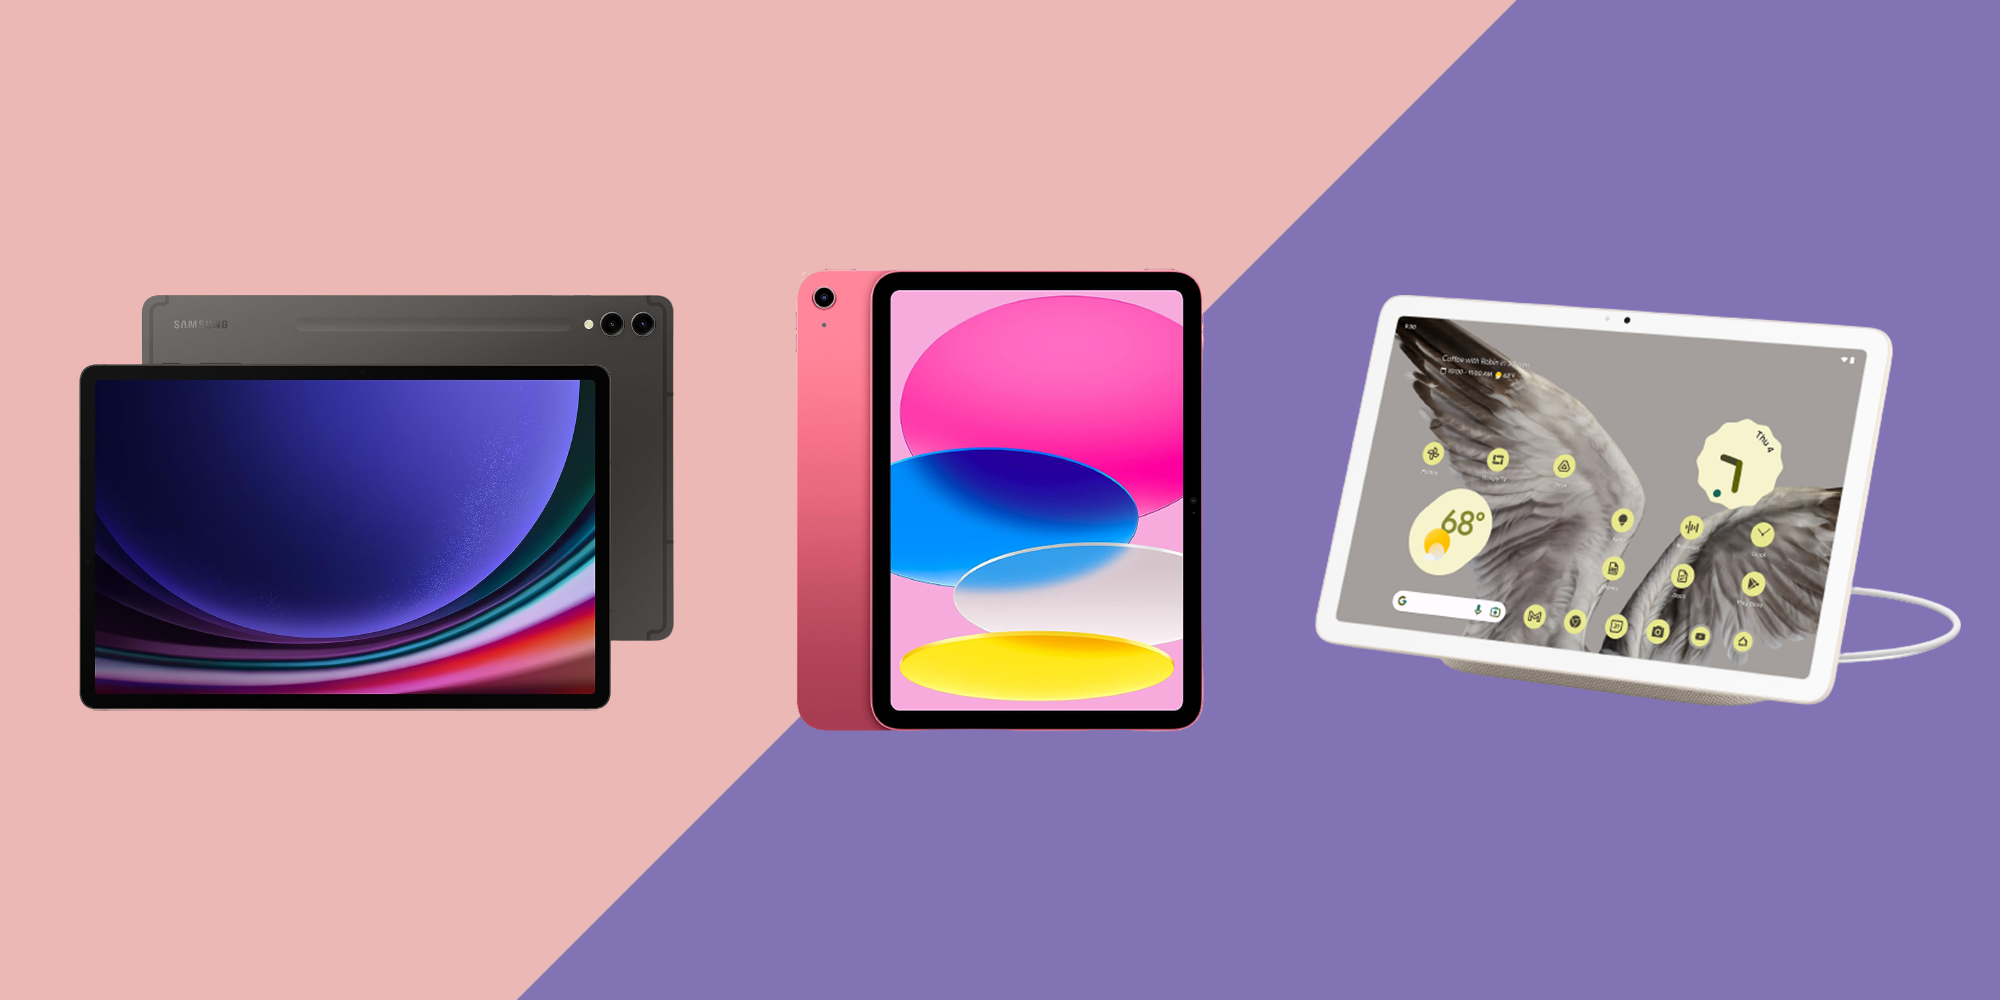 Pixel Tablet vs iPad Air - BEST 2023 Mid-Range Tablet? 